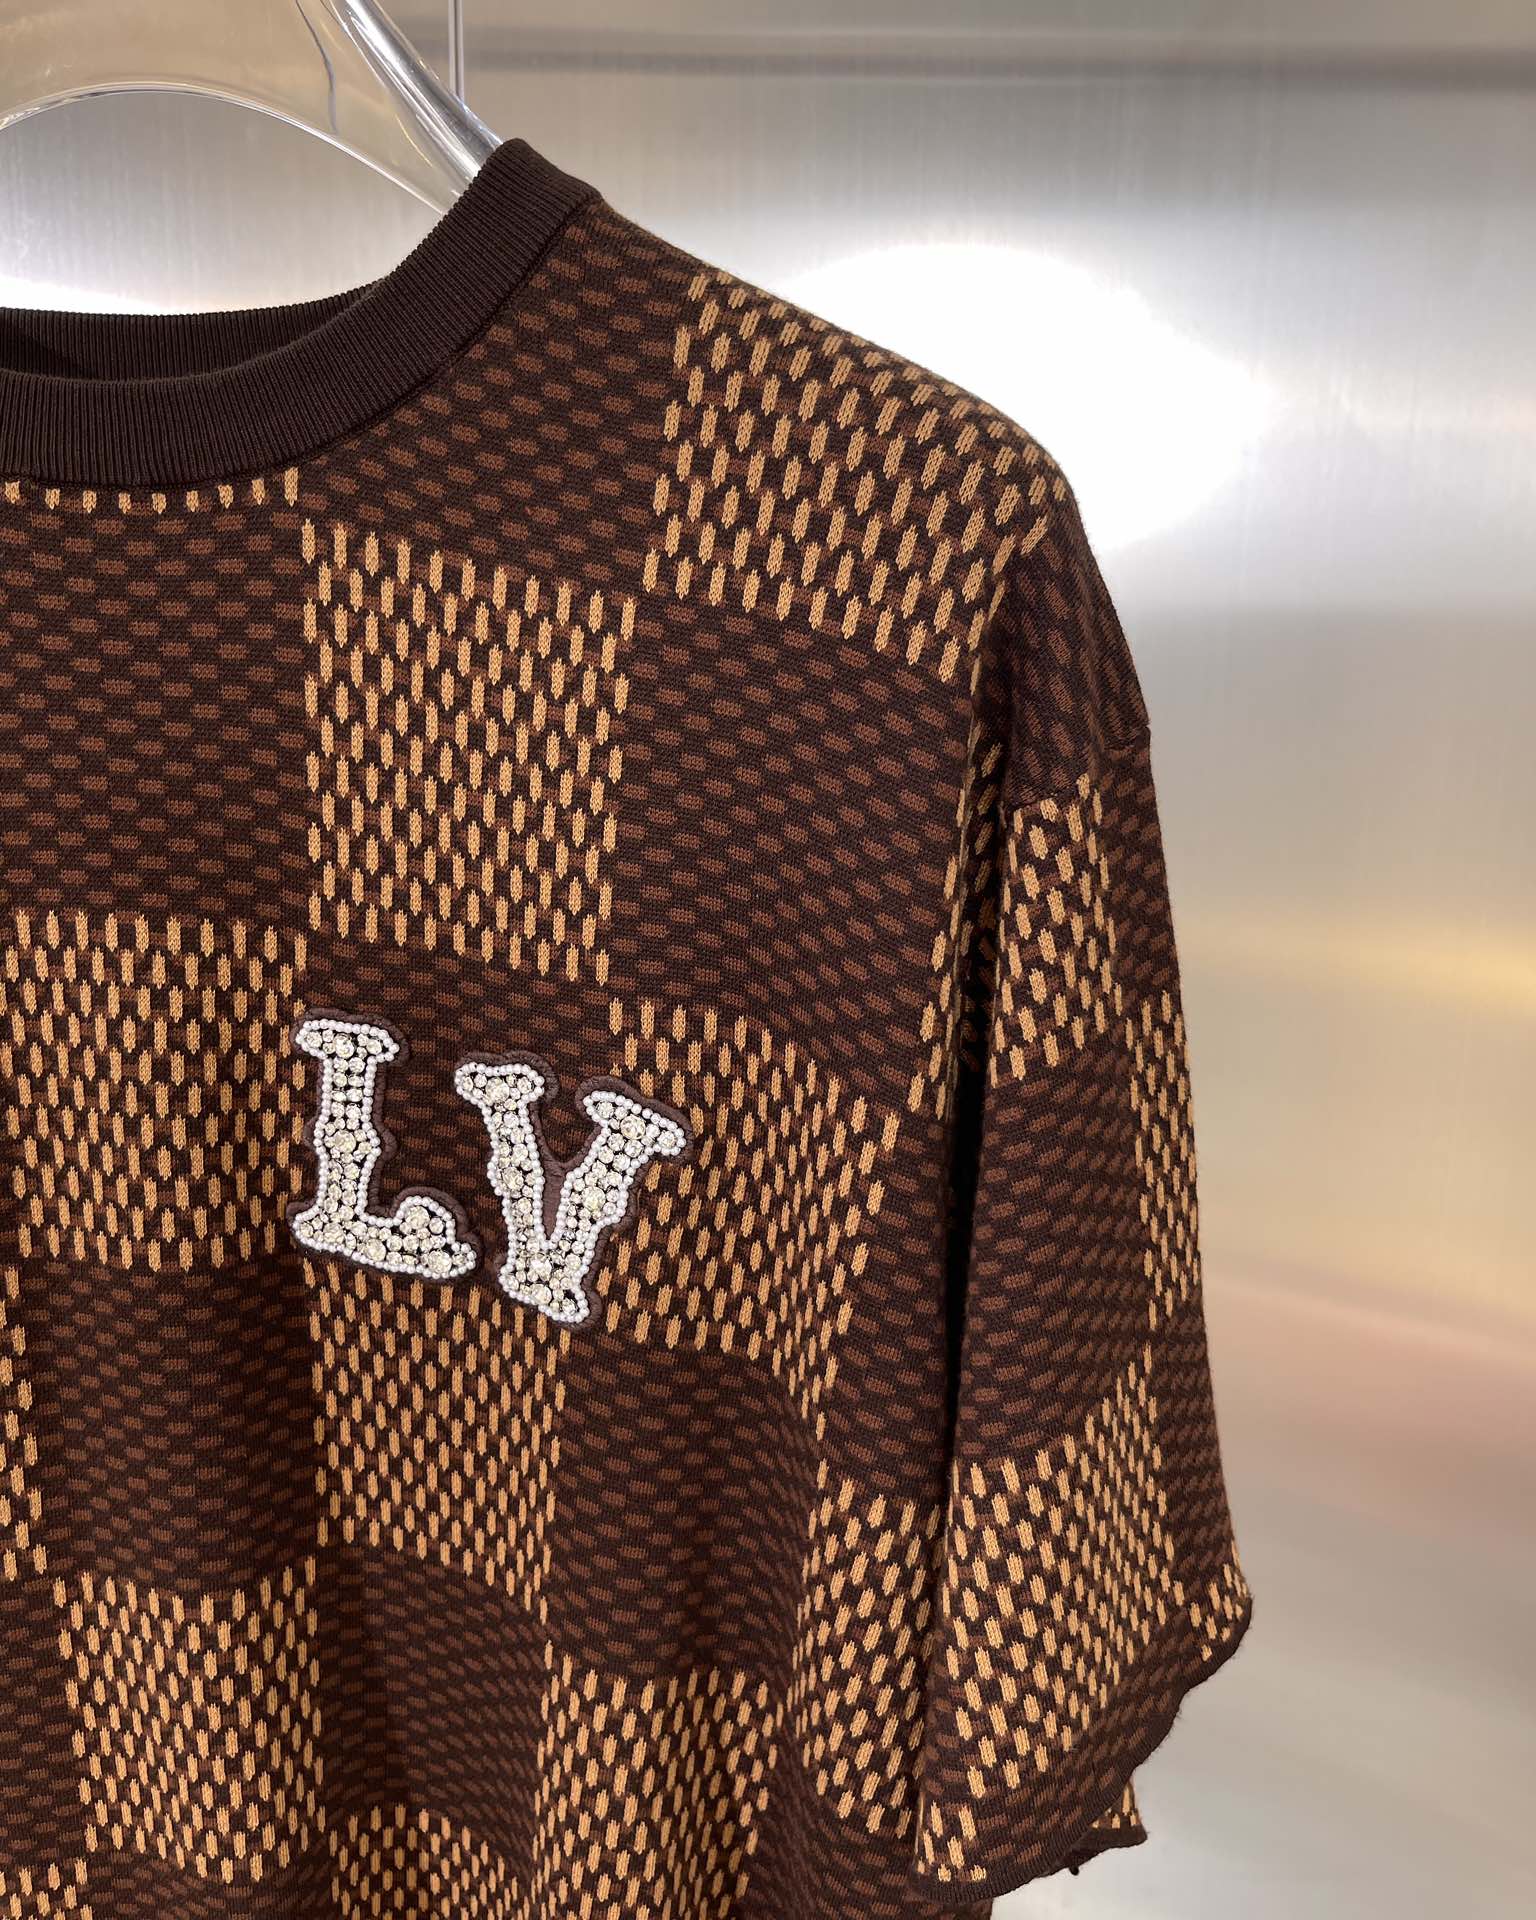 LouisVuitton驴牌LV款式男款短袖T恤衫T-shirtDAMIERLV仿水晶贴饰棉质短袖圆领衫